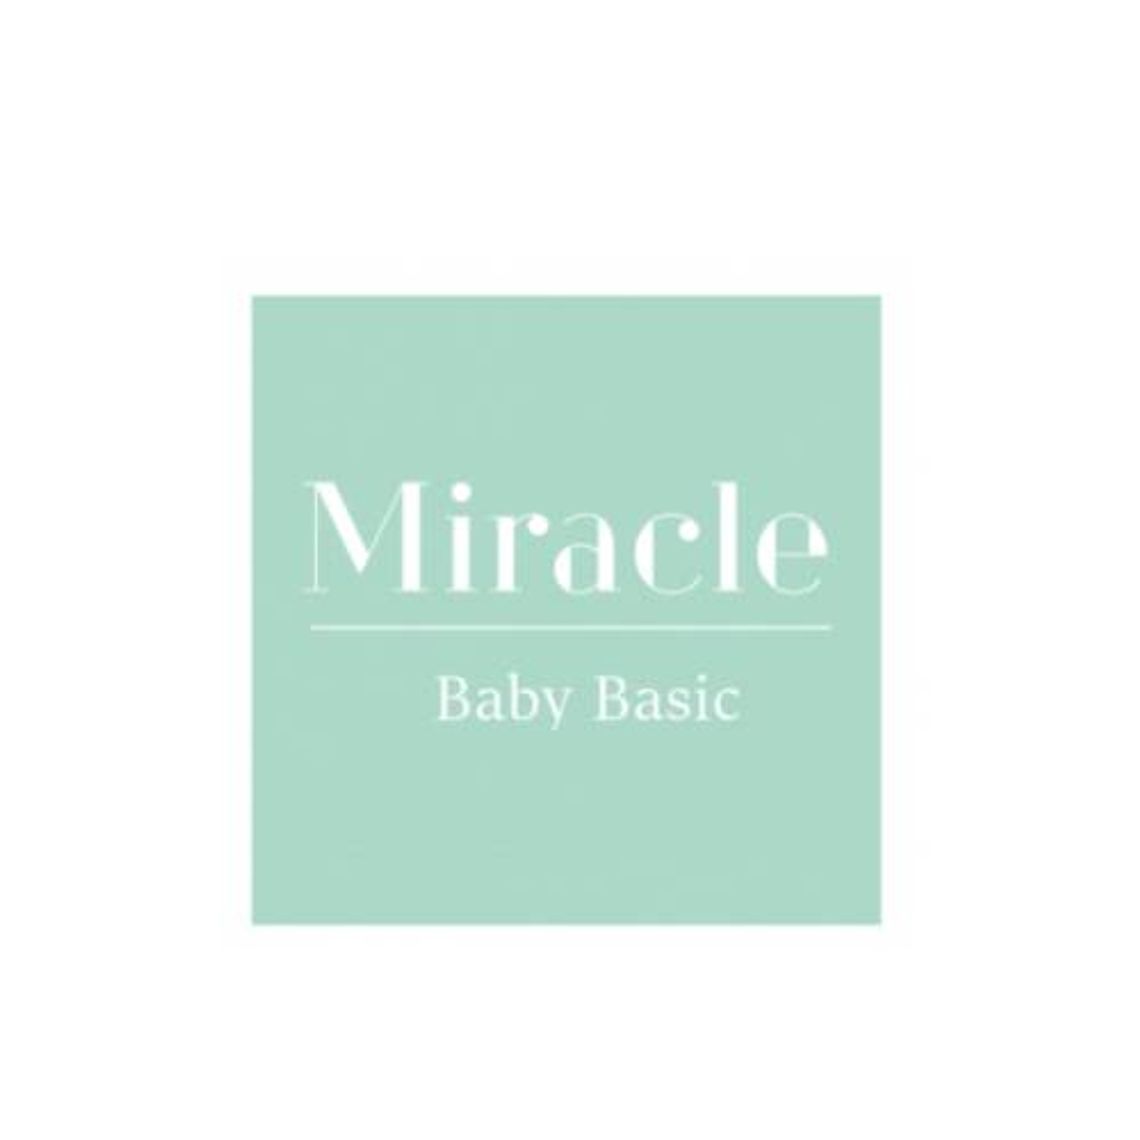 Miracle - eleganckie i komfortowe ubrania dla ciężarnych